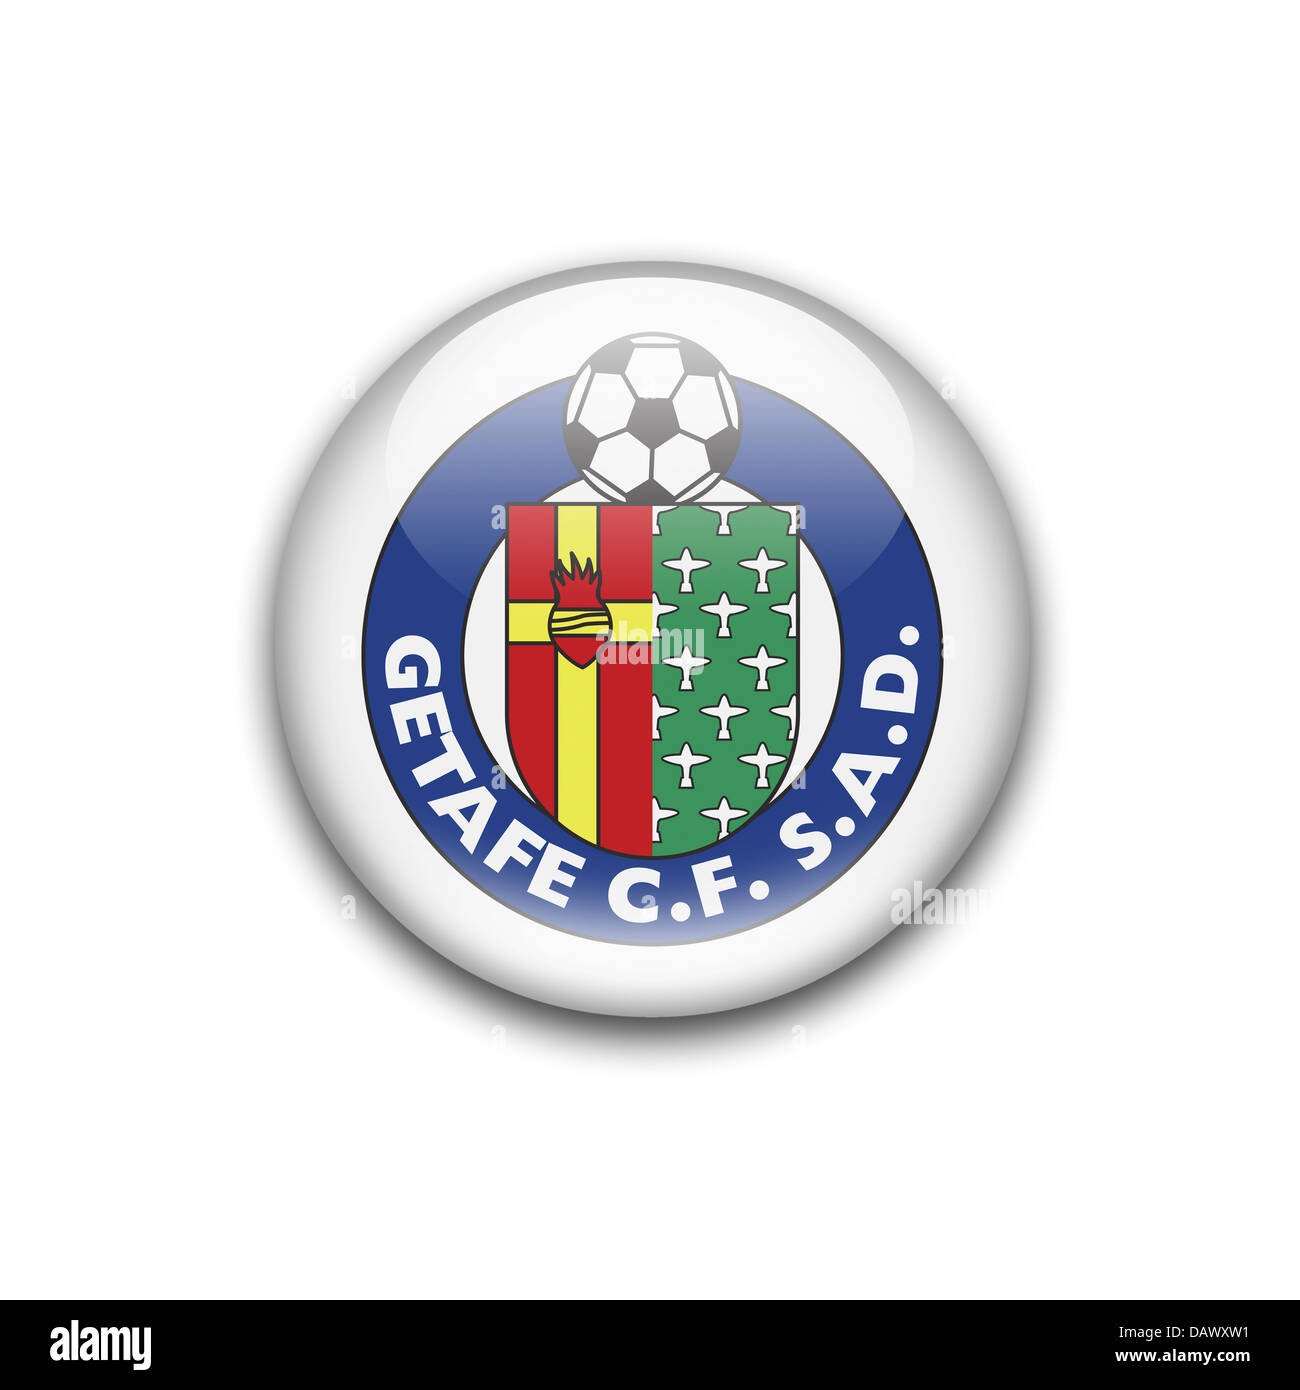 Geta fe C.F. S.A.D flag icon emblem logo symbol Stock Photo